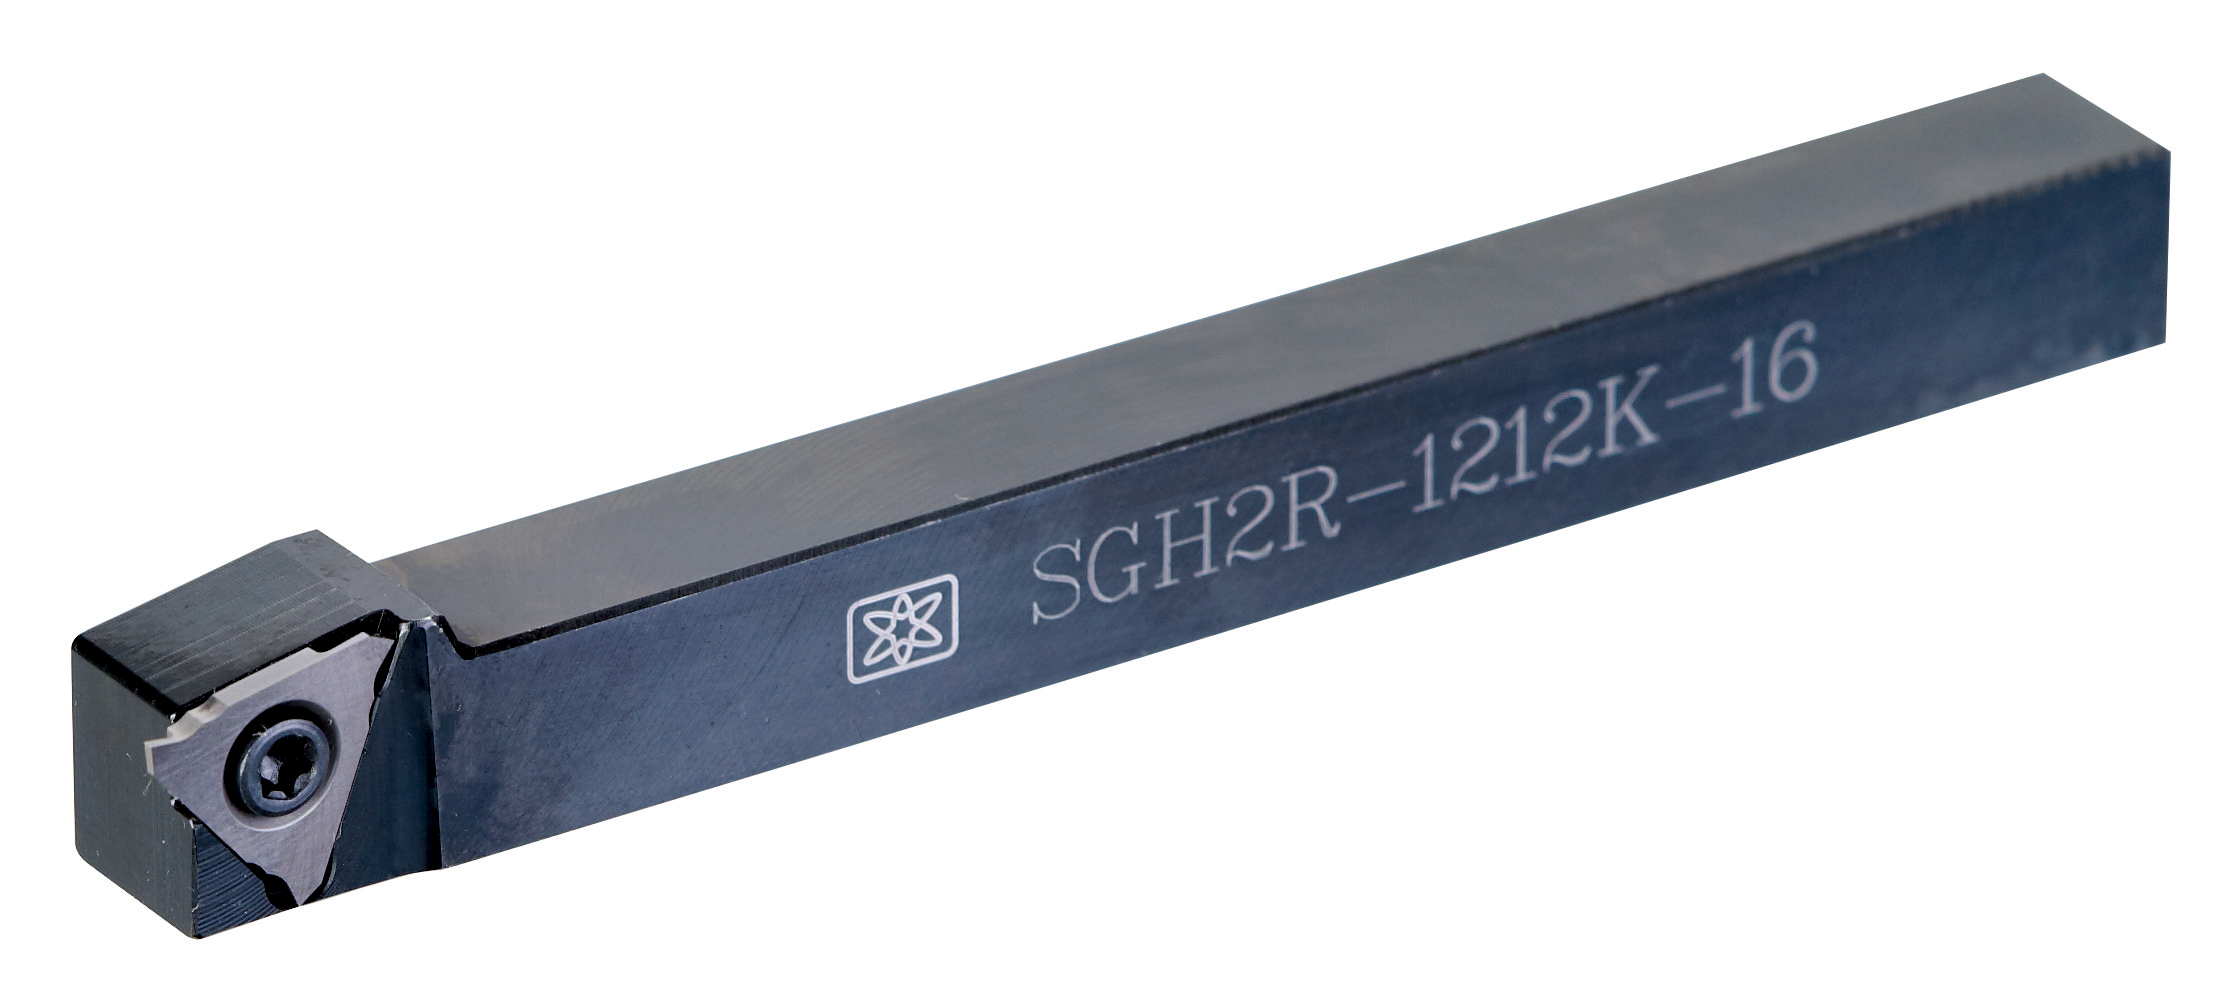 Catalog|SGH2R (SMG/TTR16...) 外徑切槽刀